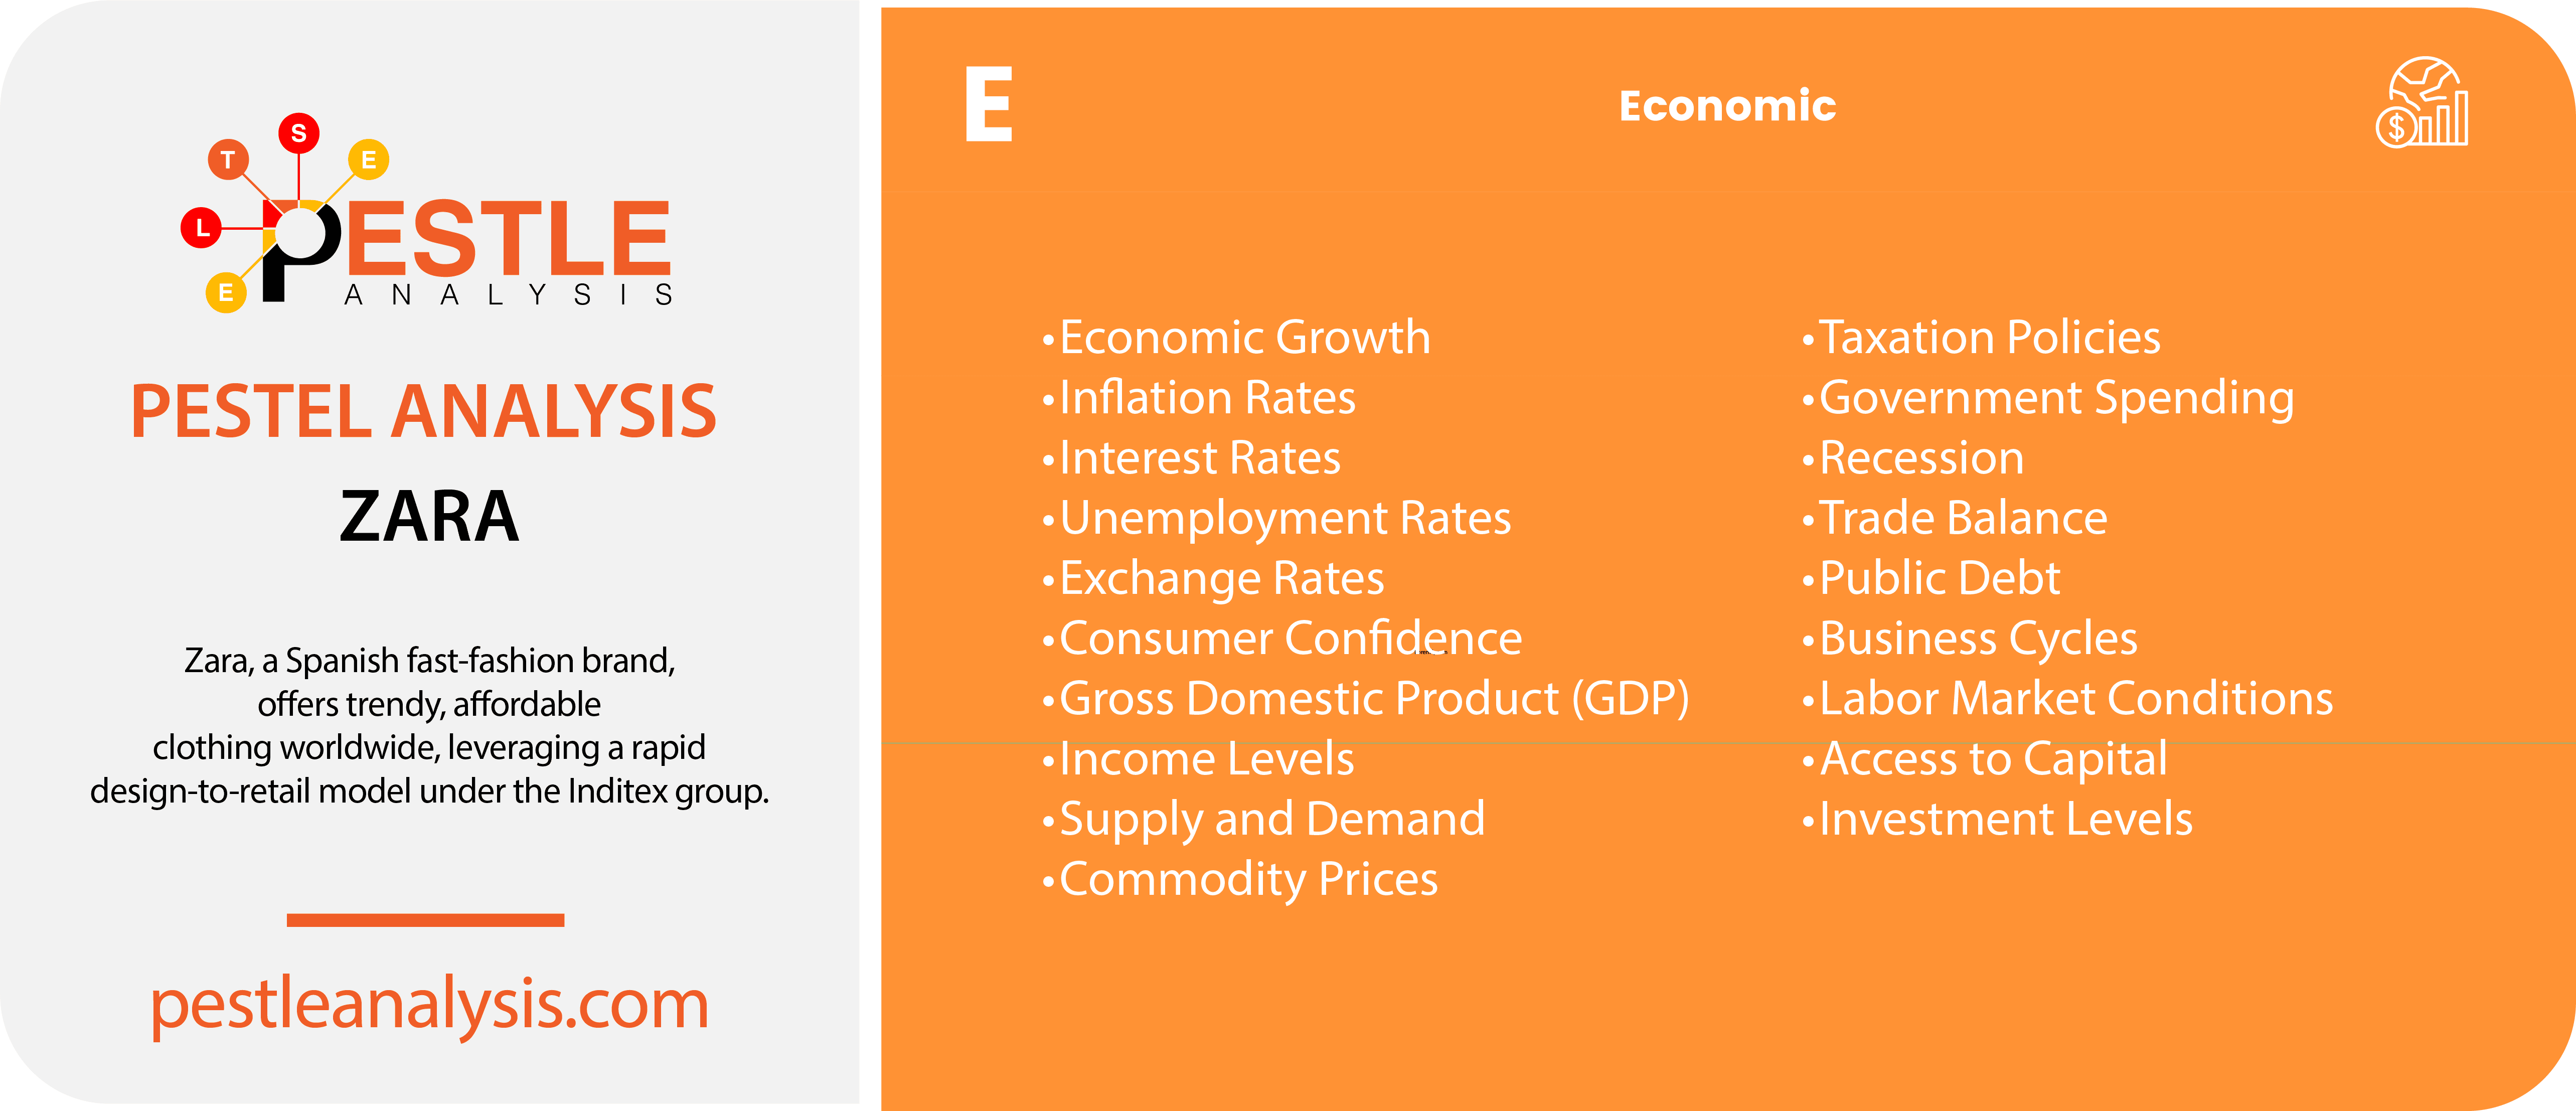 zara-pestle-analysis-economic-factors-template